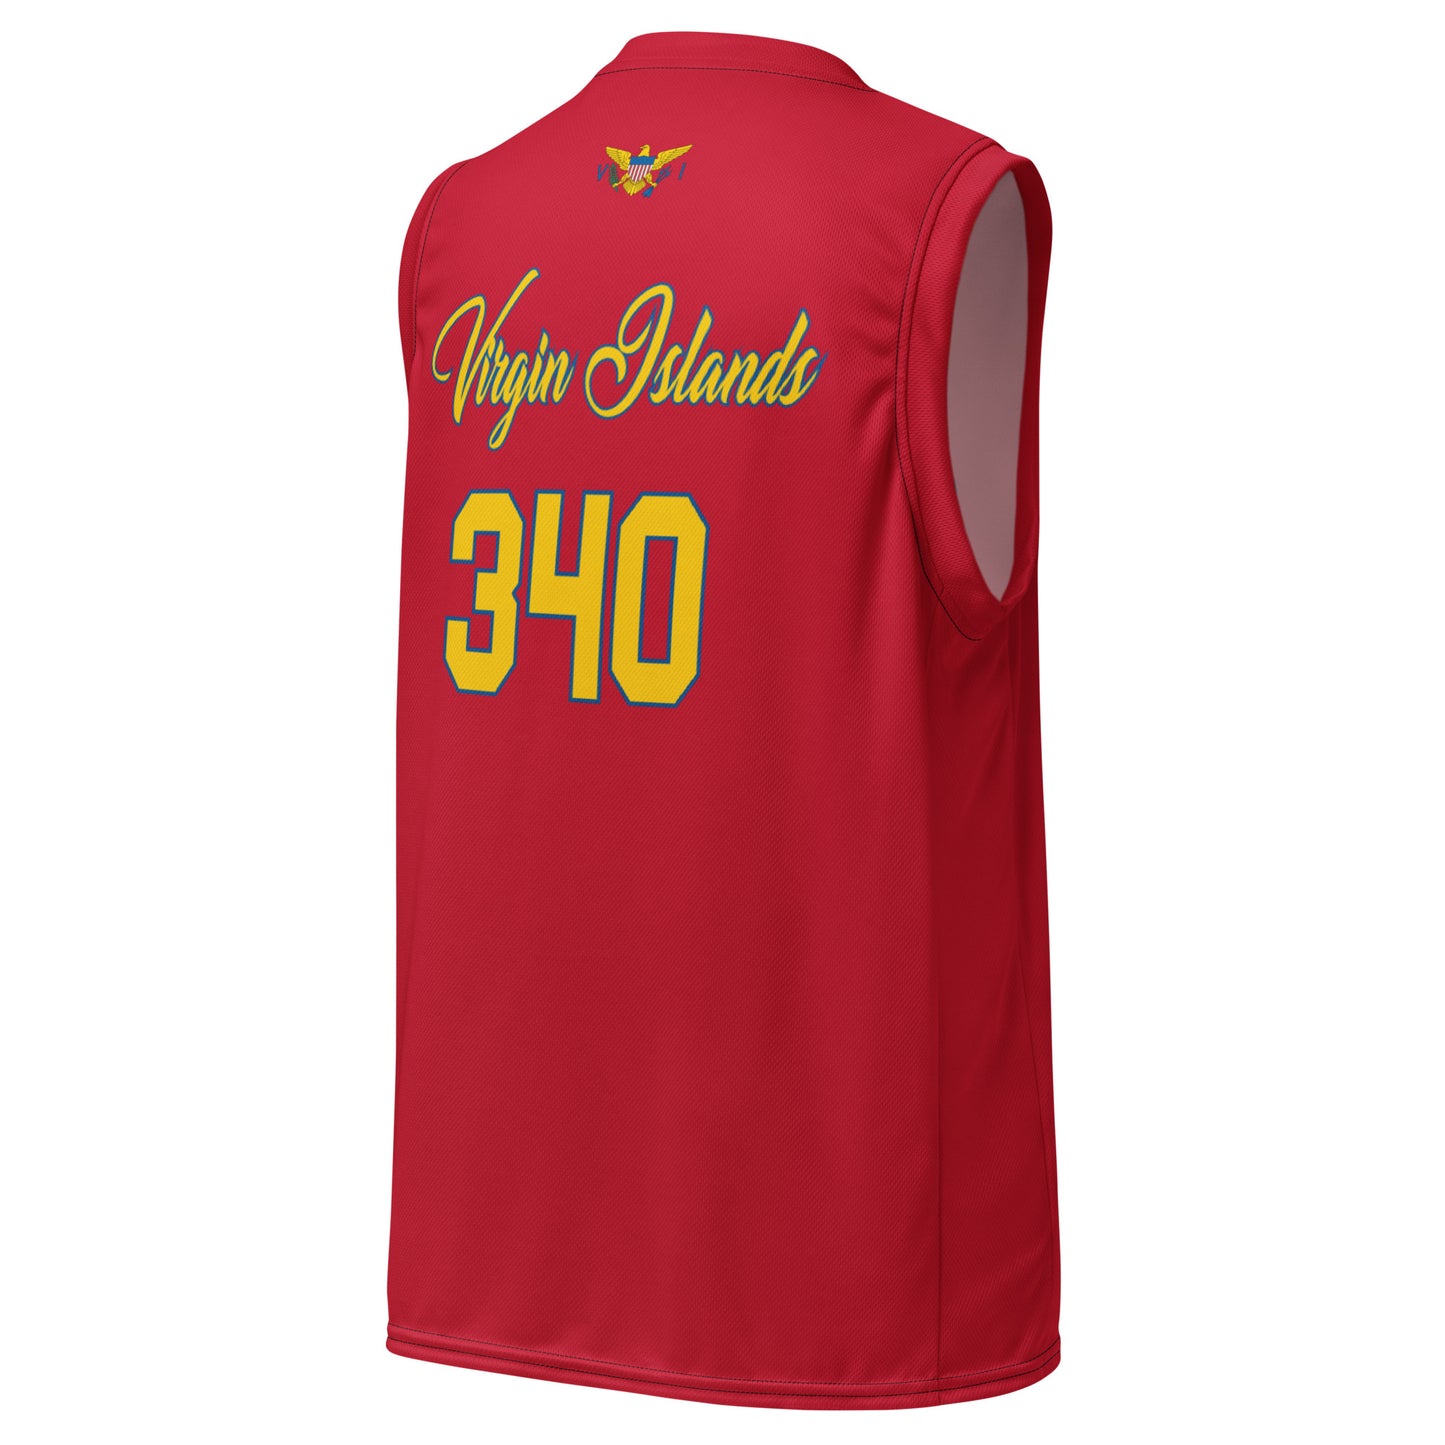 Cherry Red Basketball Jersey | Phade Fashion Virgin Islands